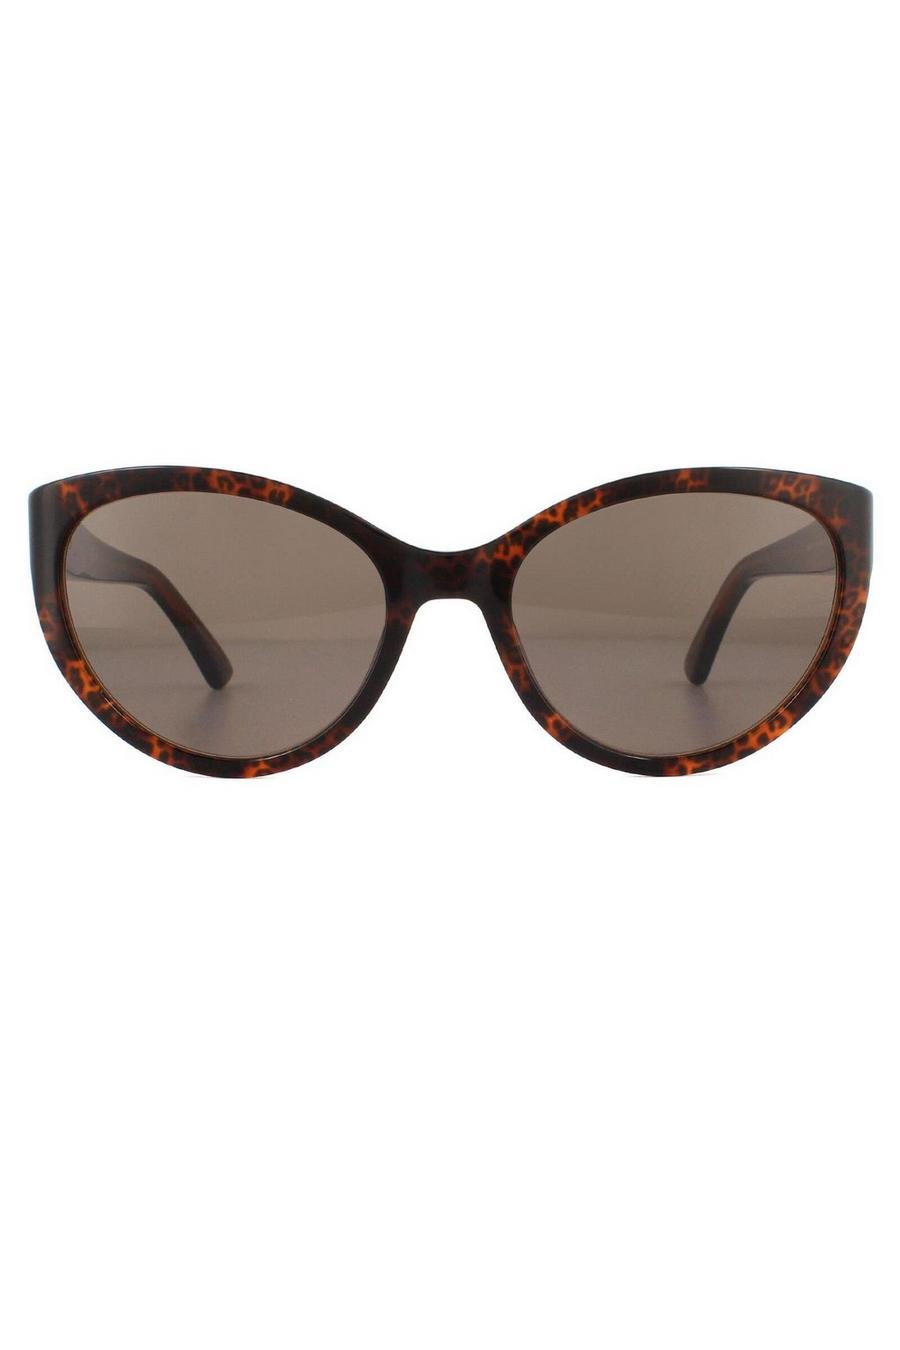 Cat Eye Havana Orange Brown Sunglasses